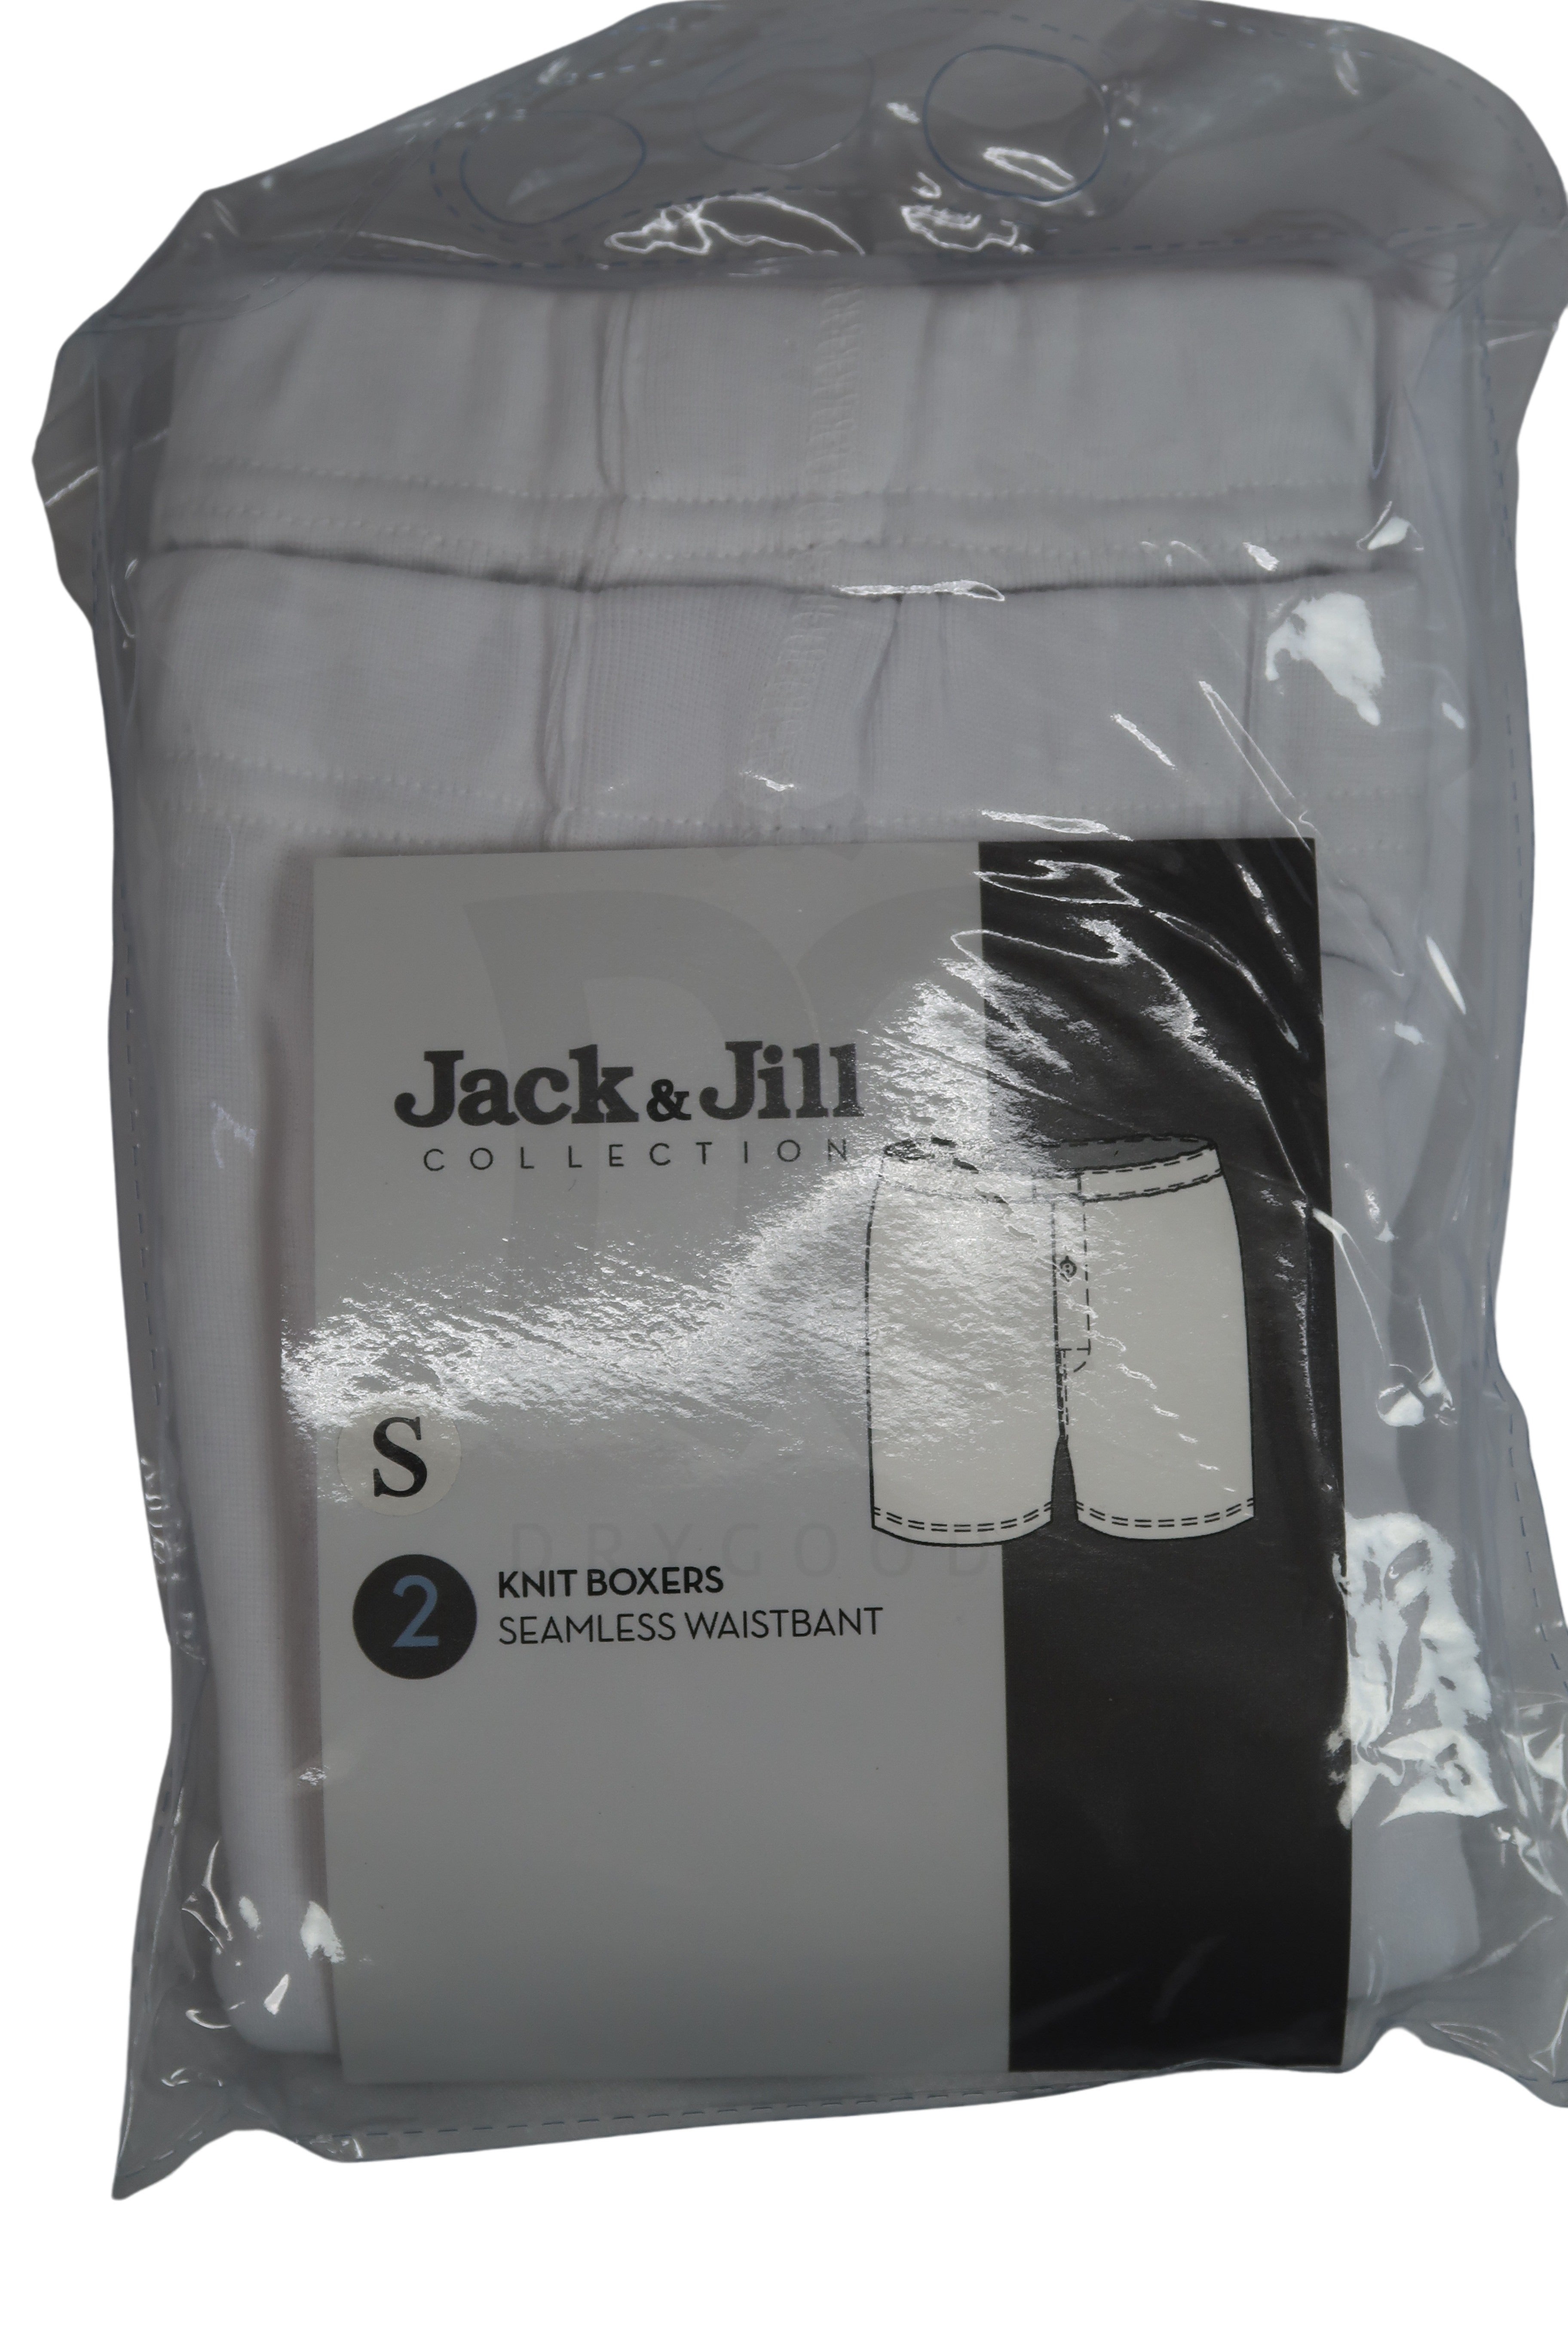 Jack&Jill Knit Boxers